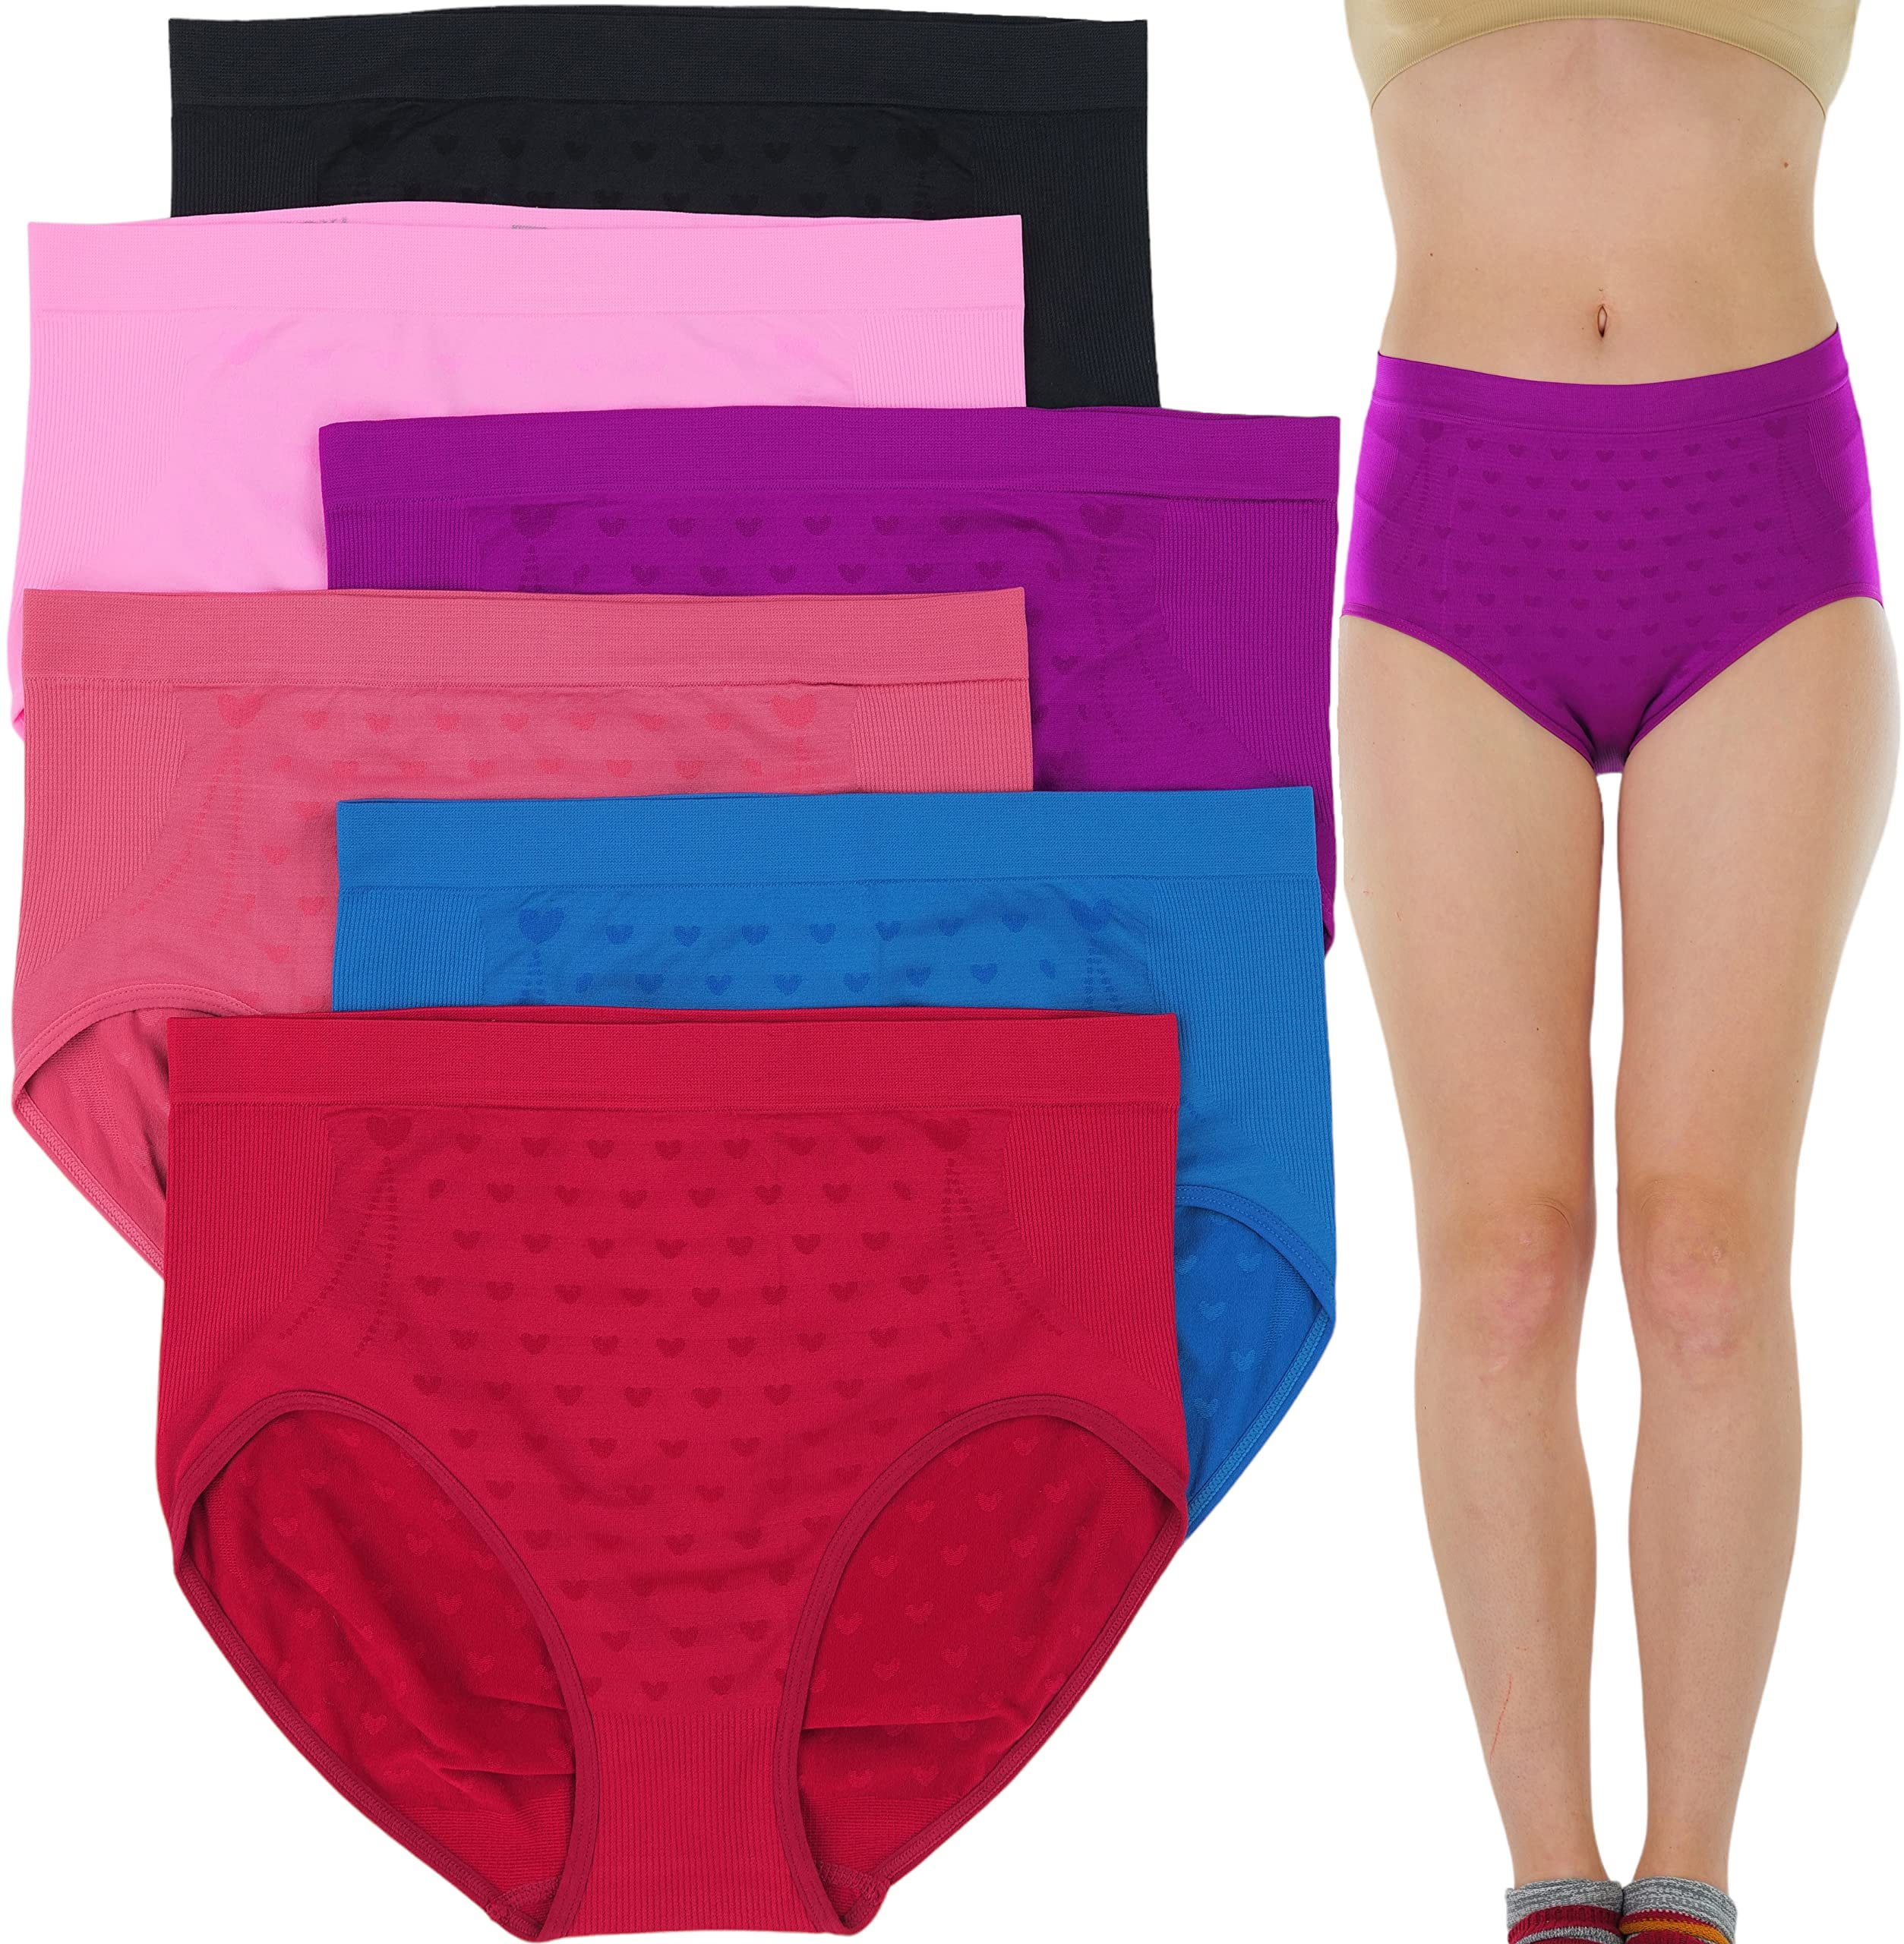 Bali Women's 3-Pack Damask Microfiber Full Brief Panty, 2 Nude/1